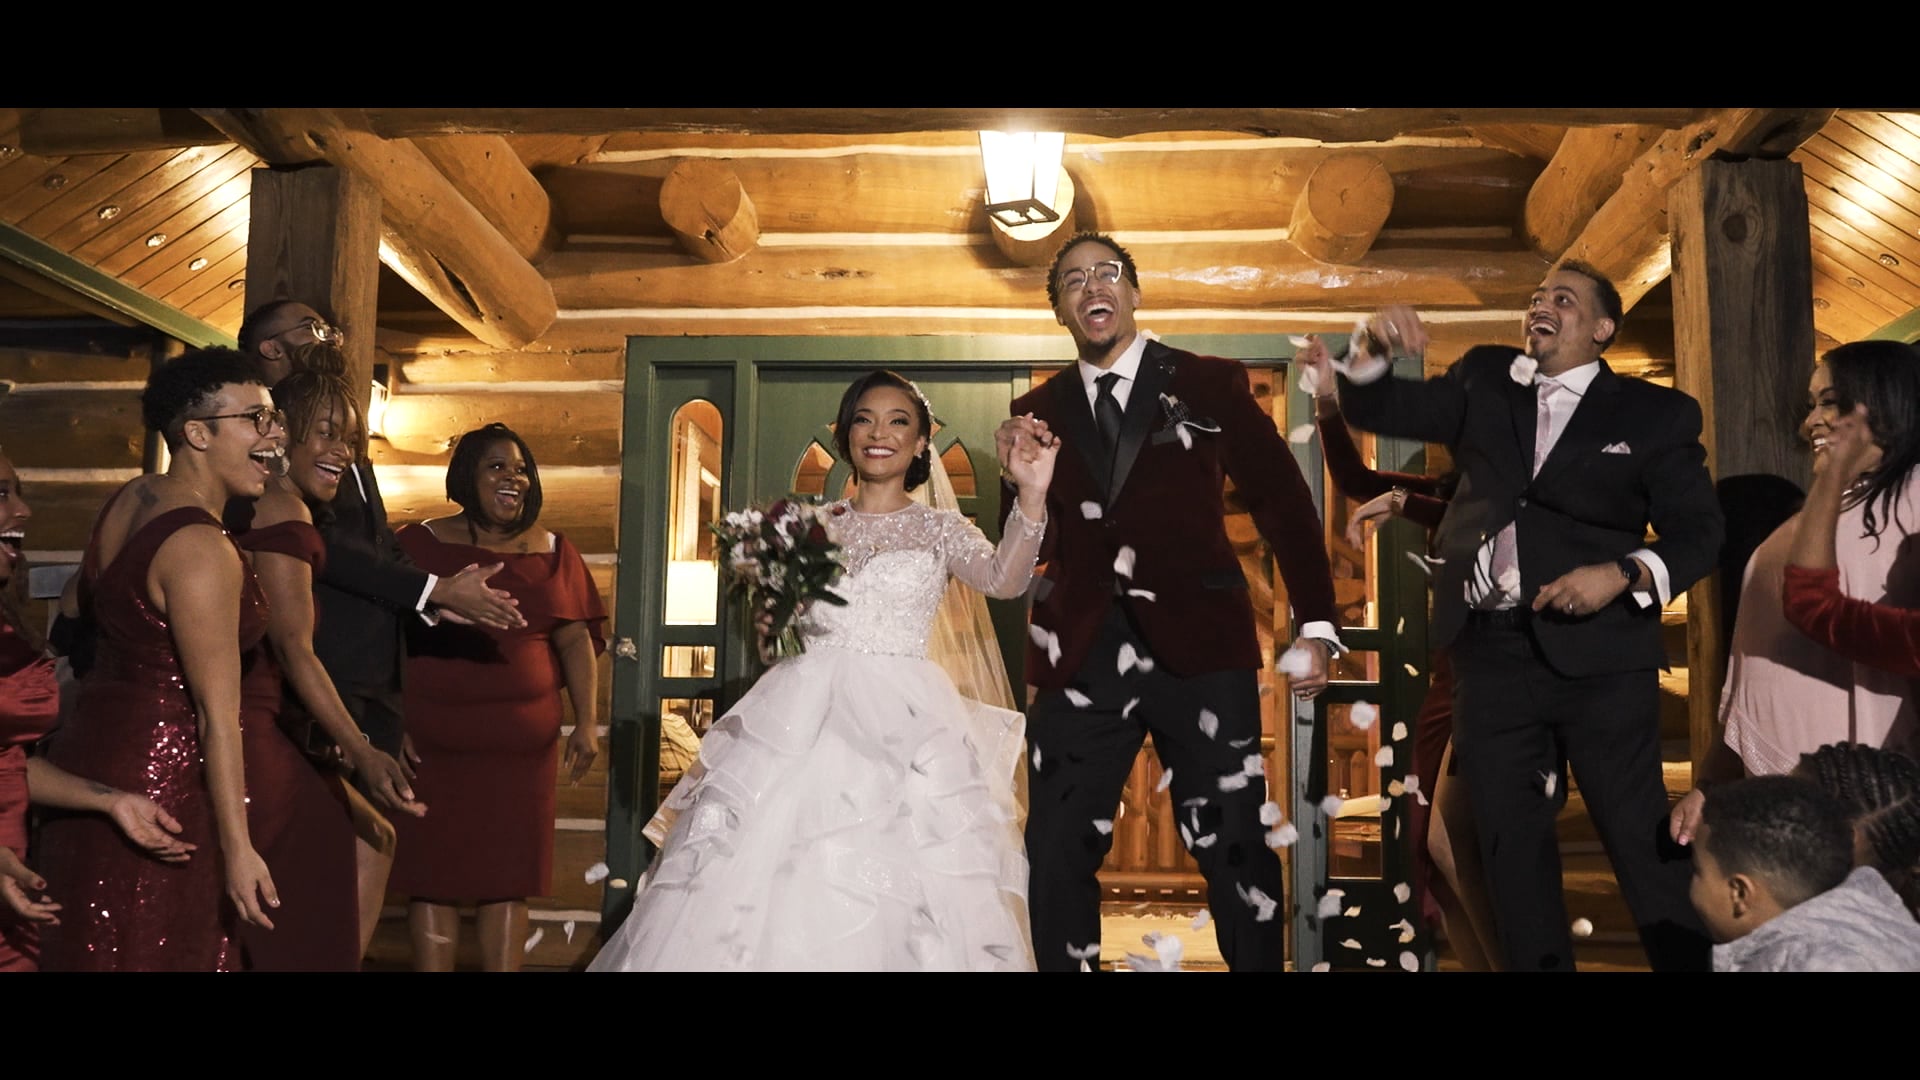 The Moore’s Wedding Trailer